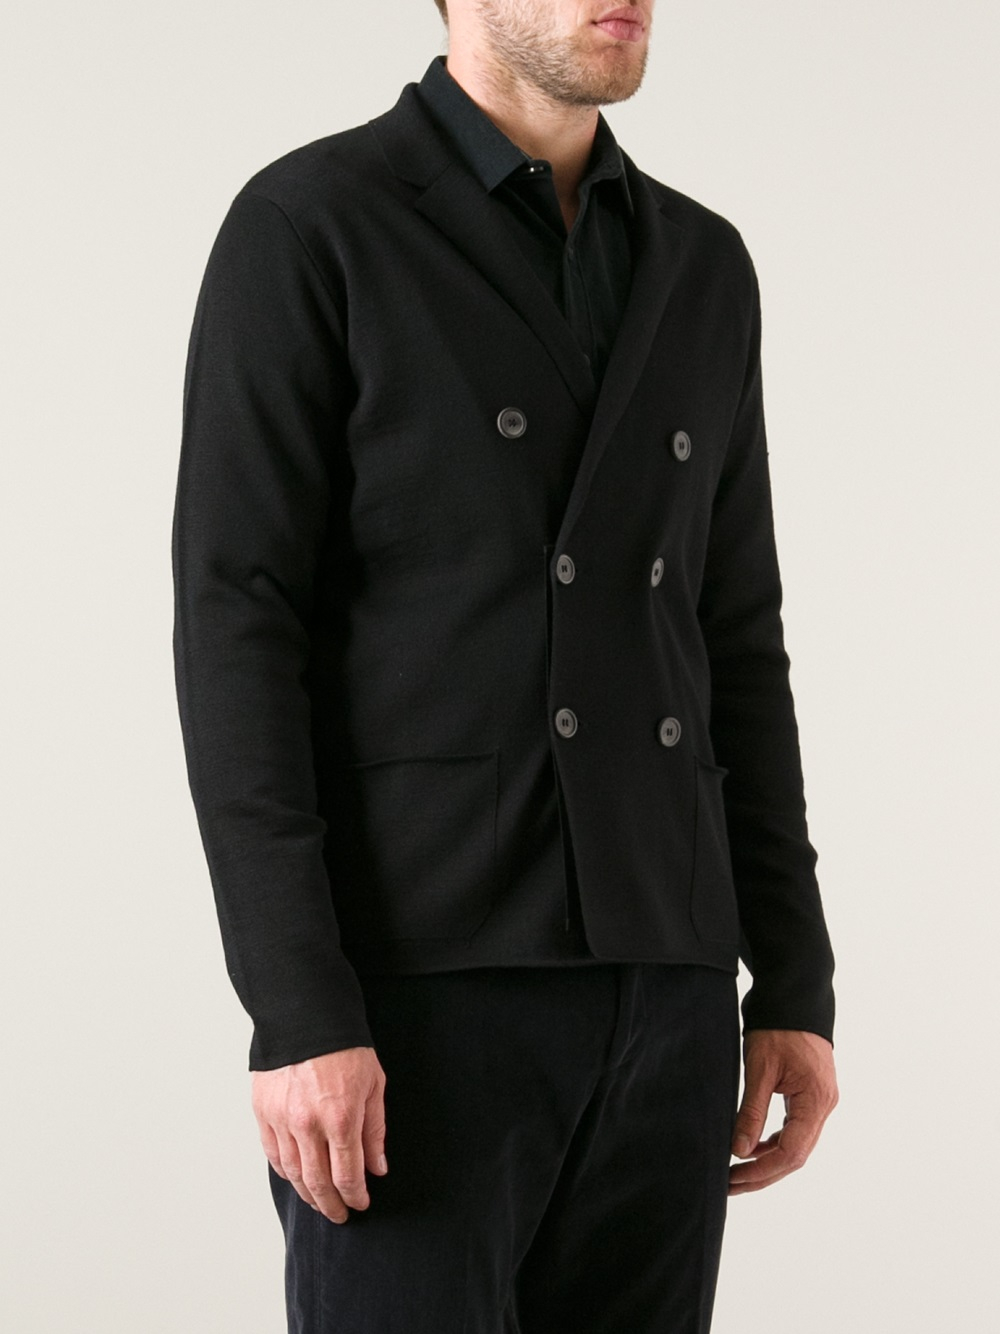 Lanvin Caban Point Milano Coat in Black for Men - Lyst